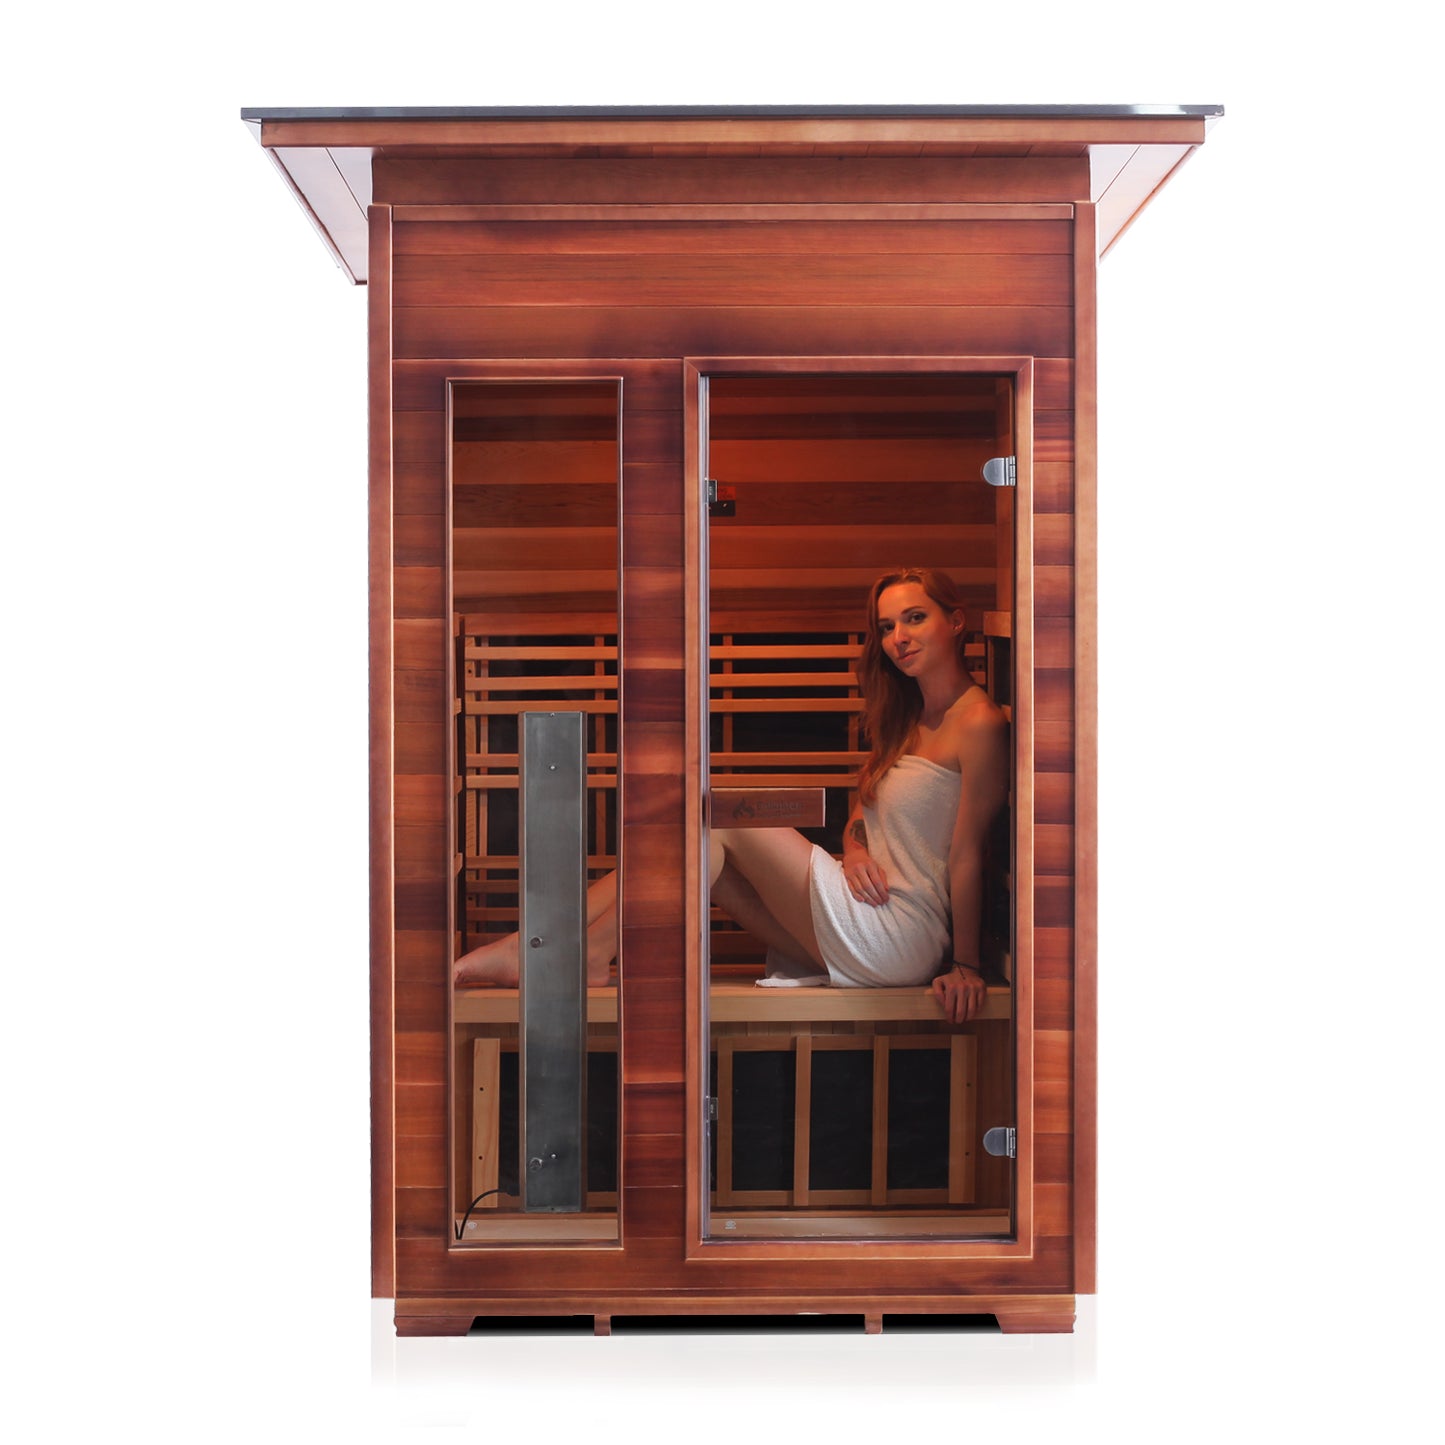 Diamond 2 Hybrid Infrared/Traditional Outdoor Sauna